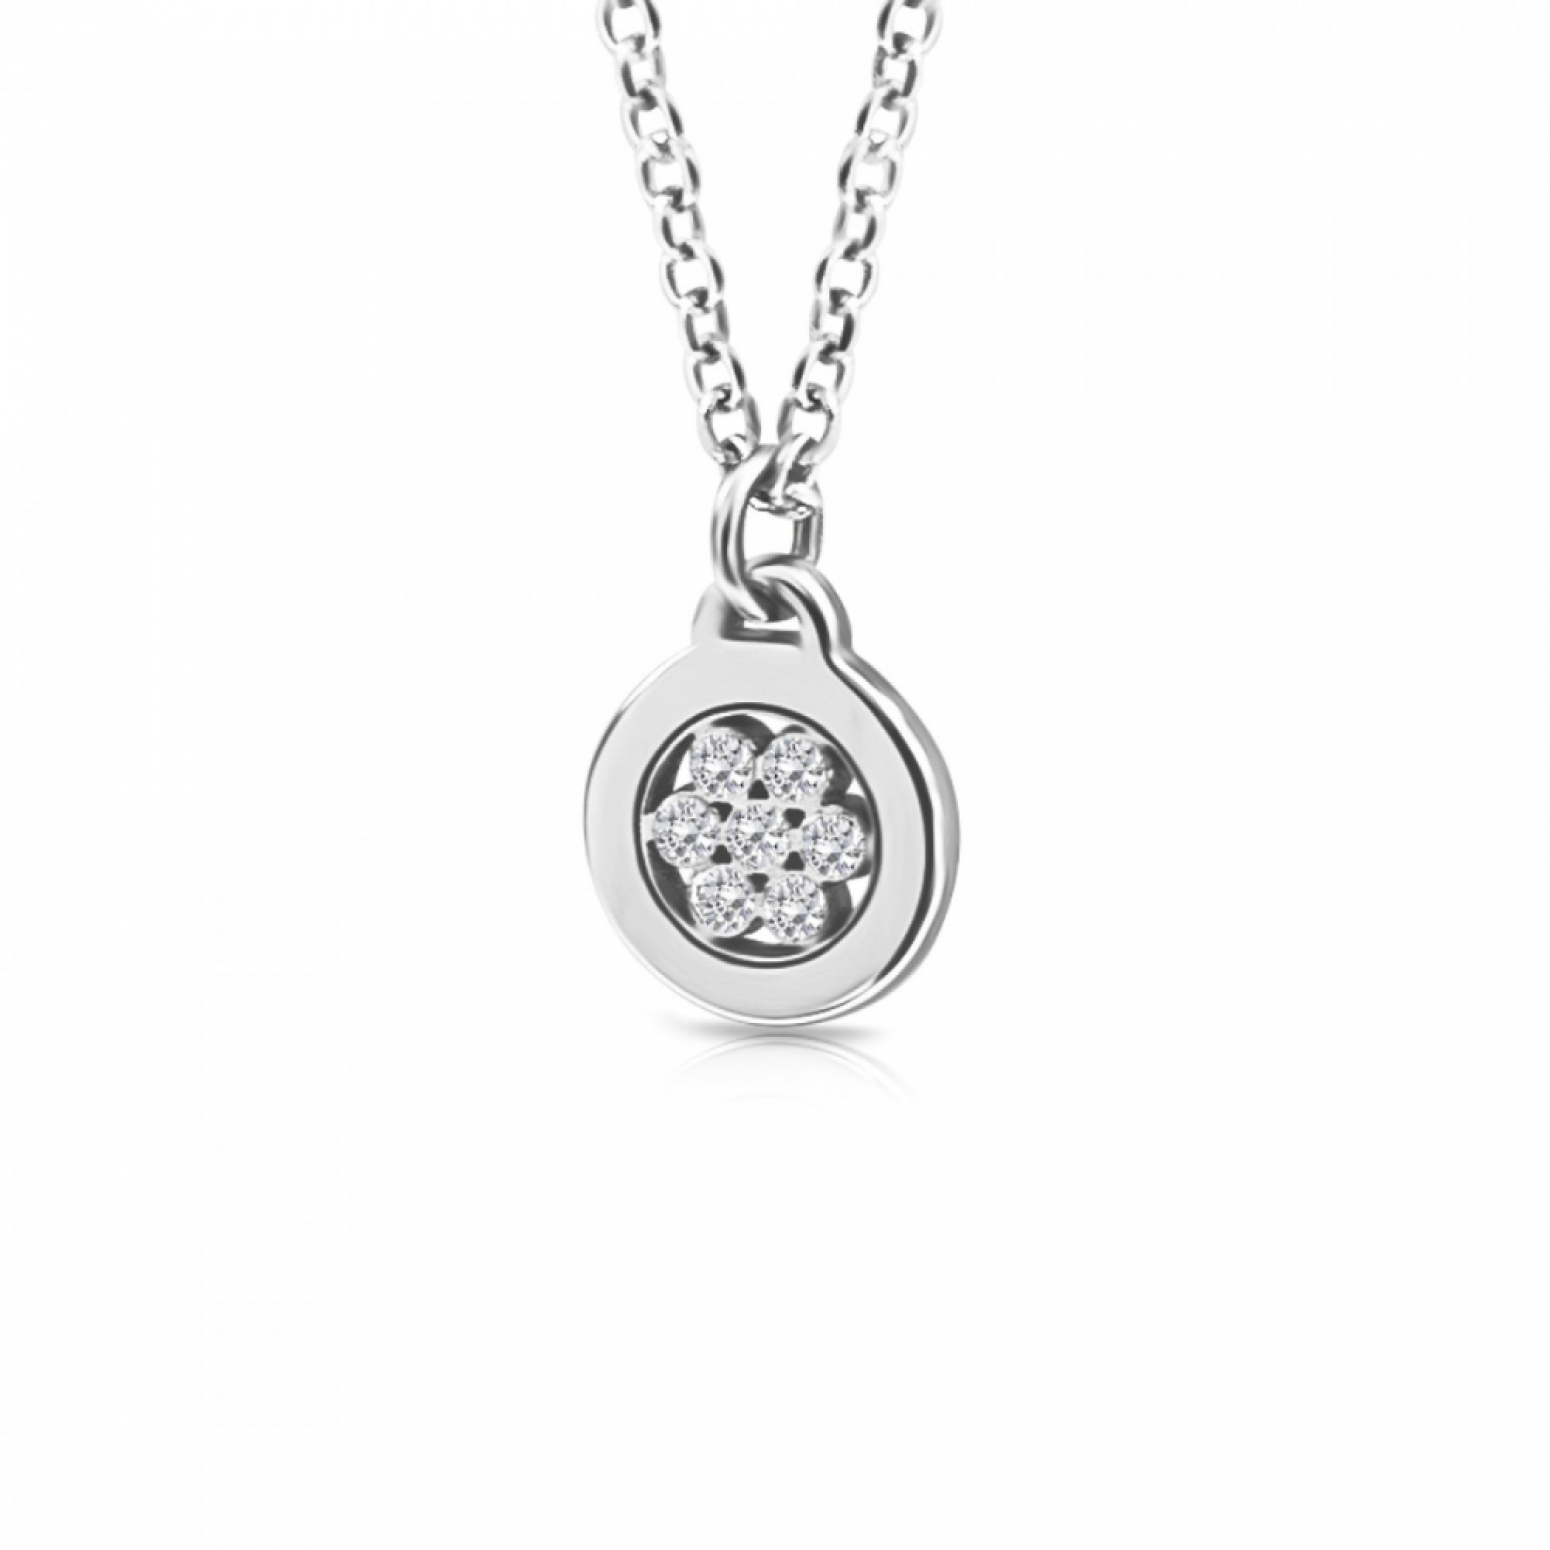 Round necklace, Κ14 white gold with diamonds 0.02ct, VS2, H ko4379 NECKLACES Κοσμηματα - chrilia.gr